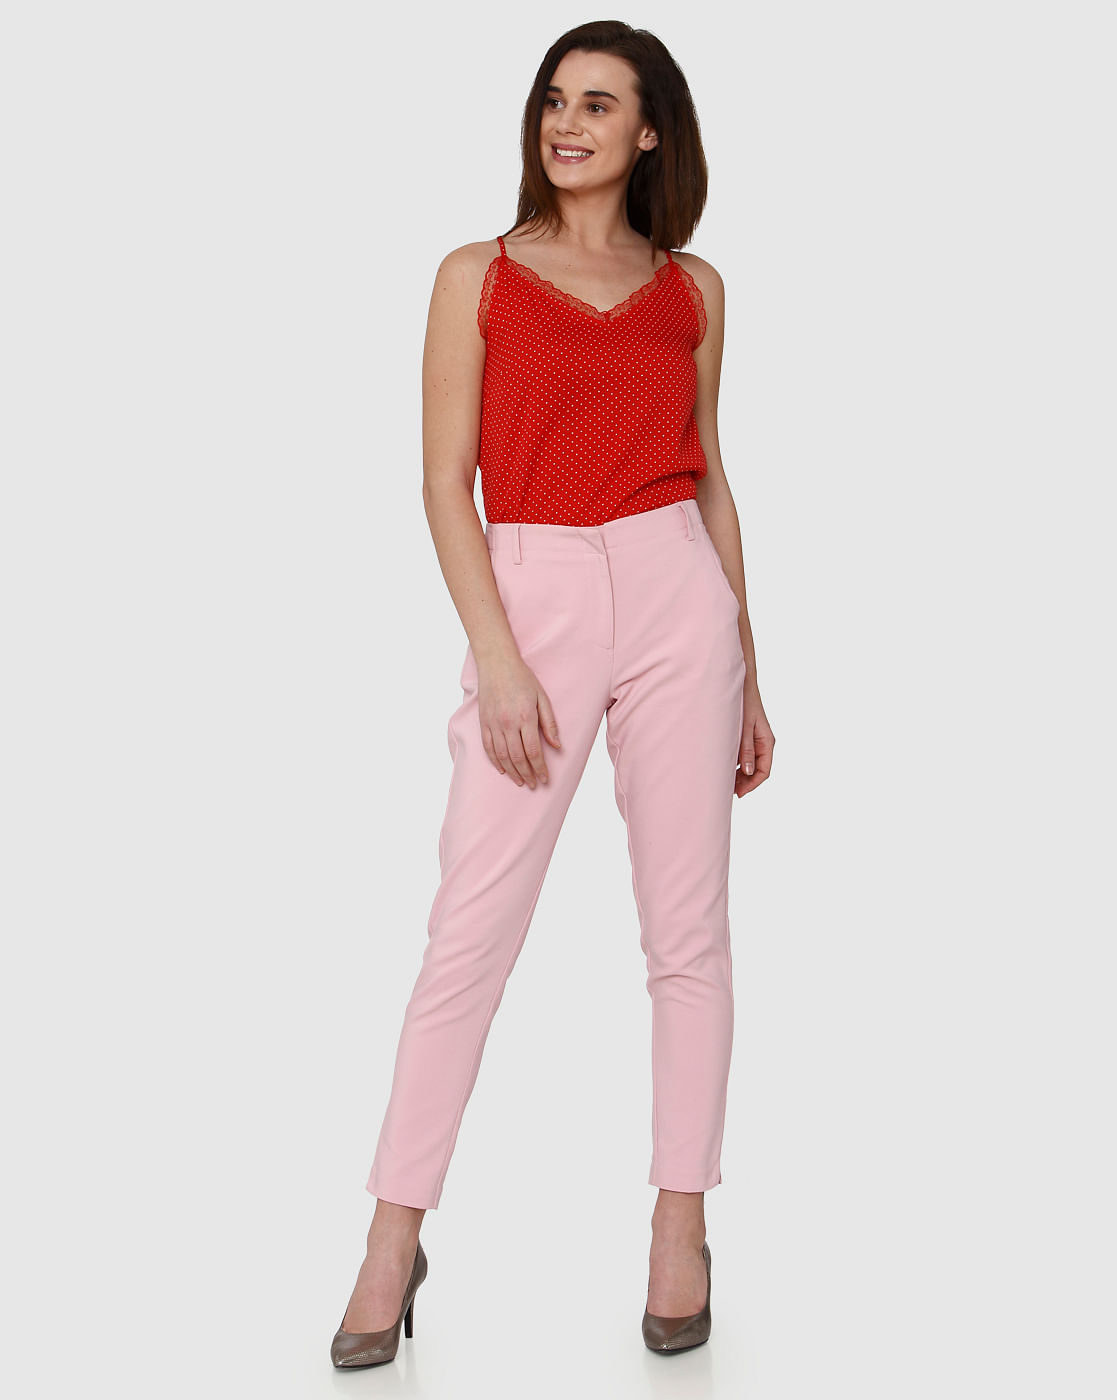 Light Pink Pant Suit for Women Pink Pant Suit Set for Women  Etsy  Light  pink pants Pink pants Pant suits for women